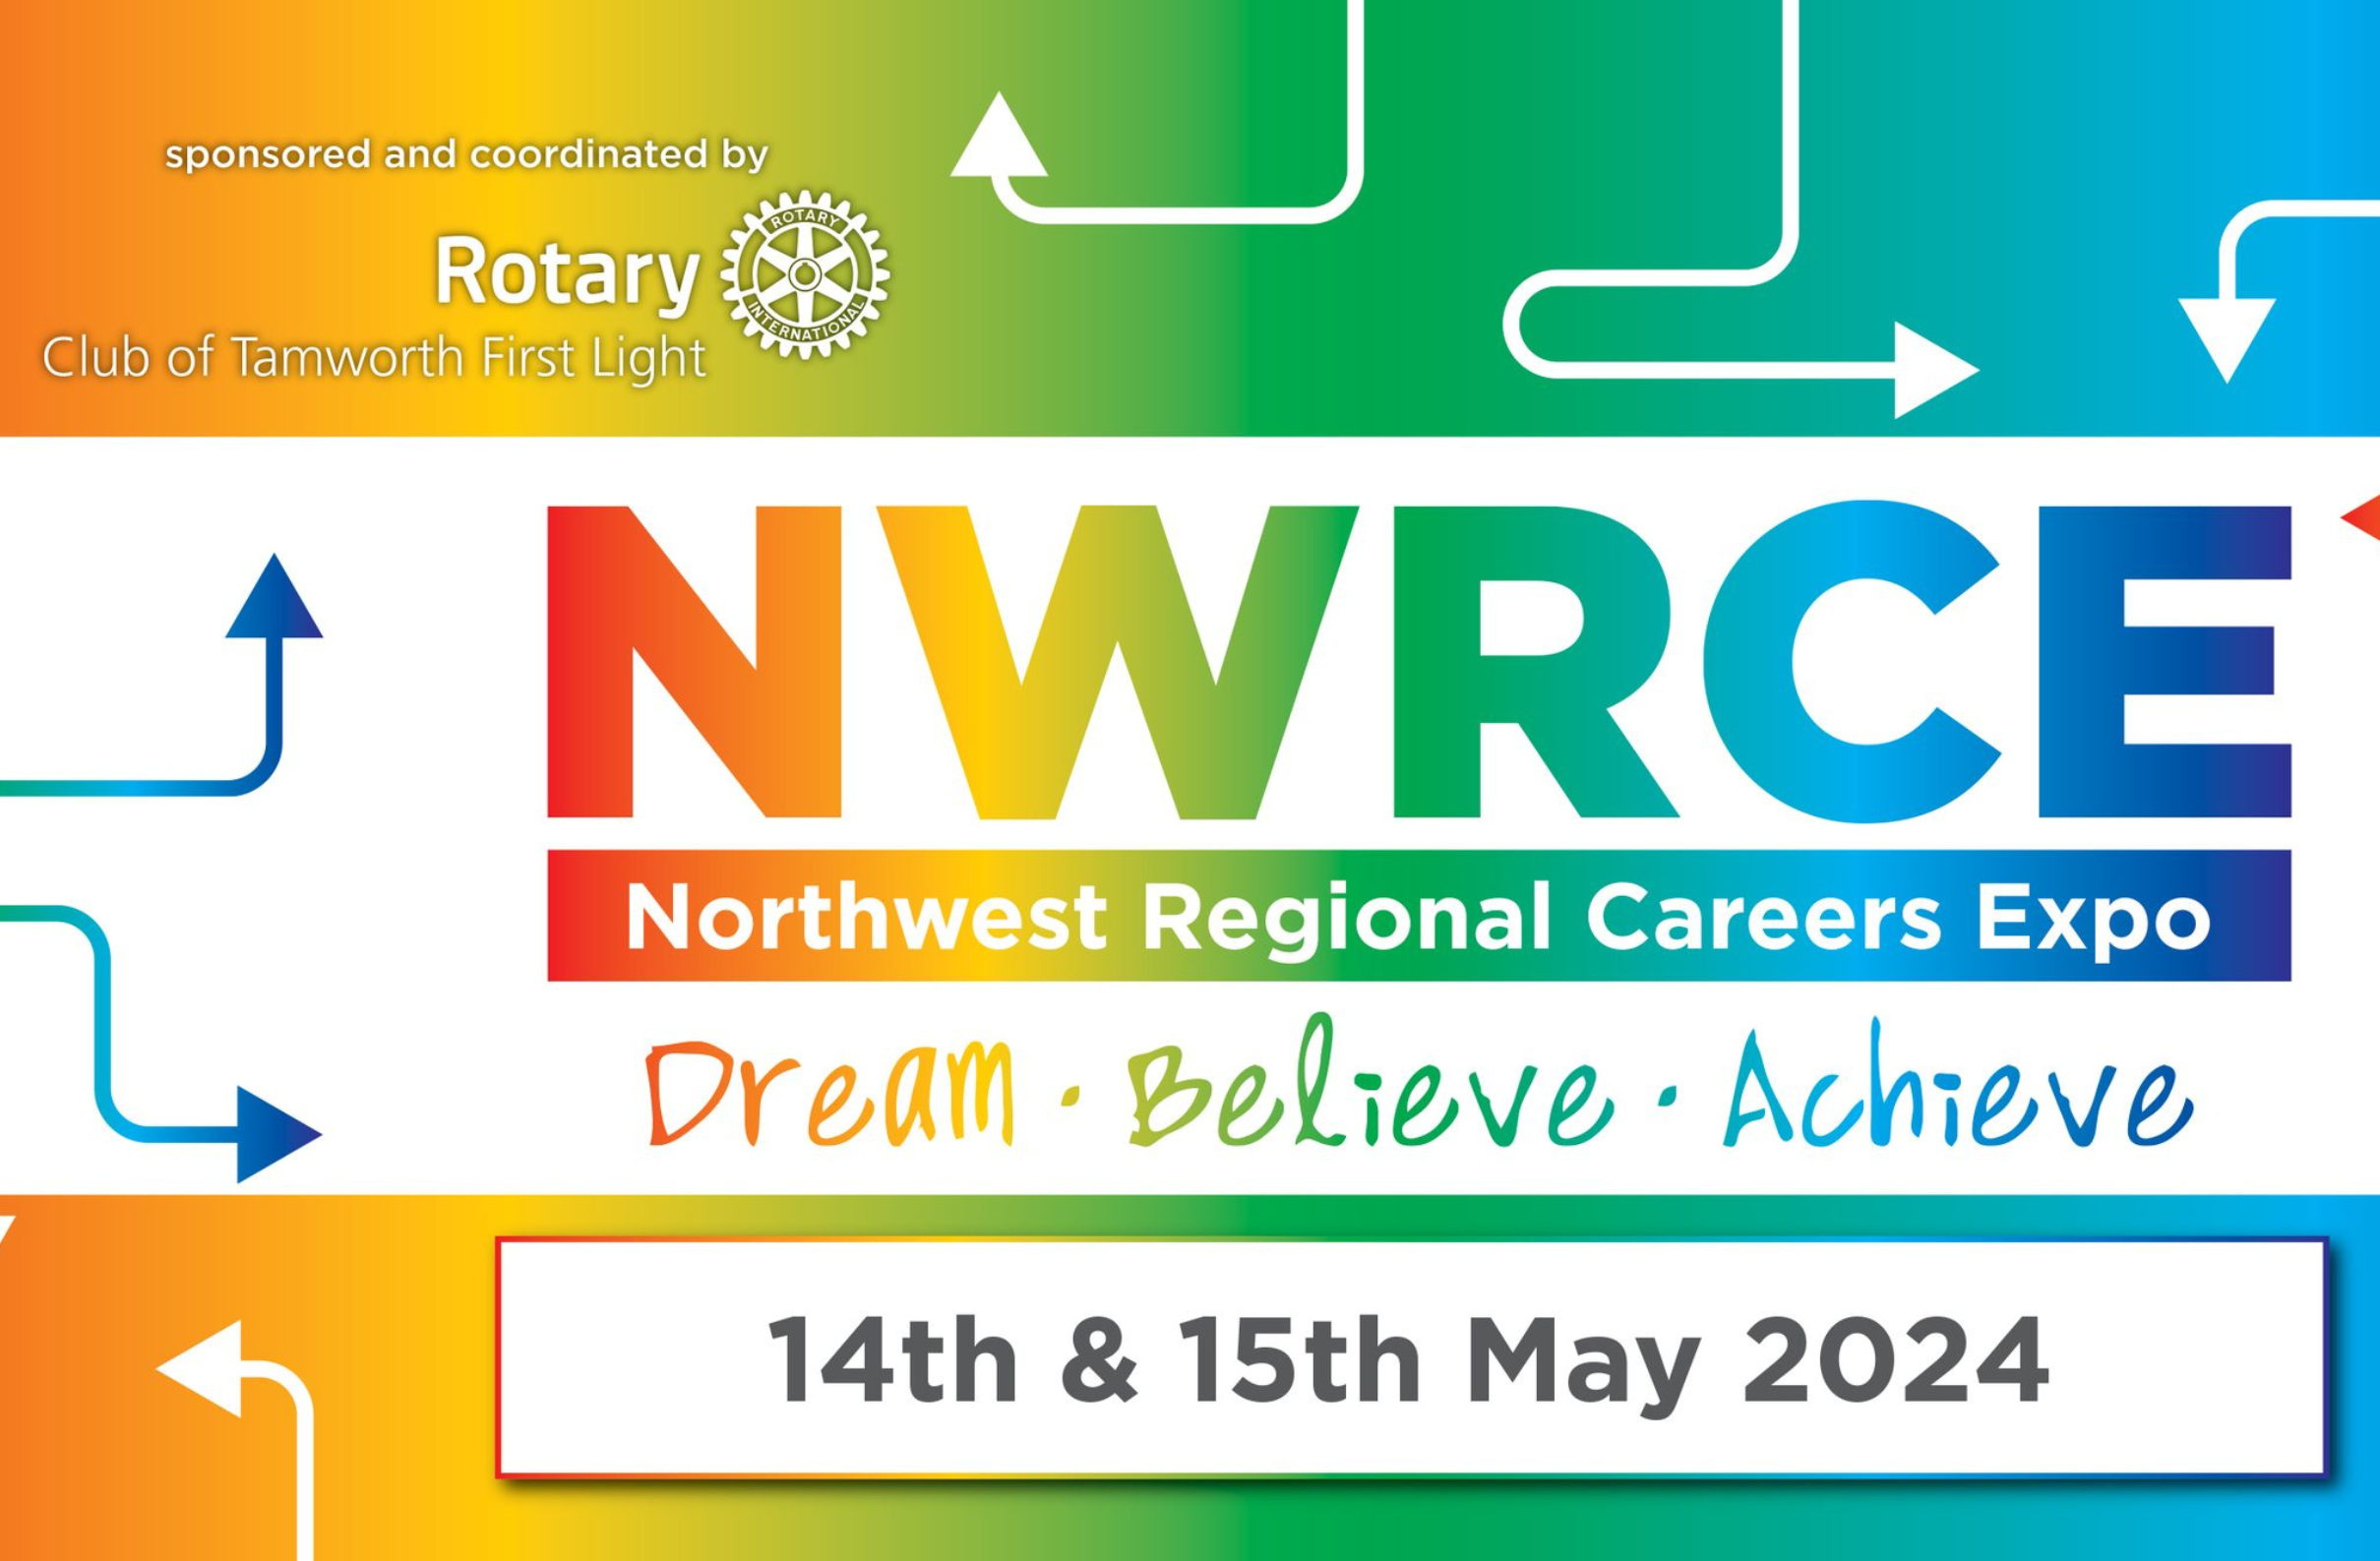 Northwest Regional Careers Expo